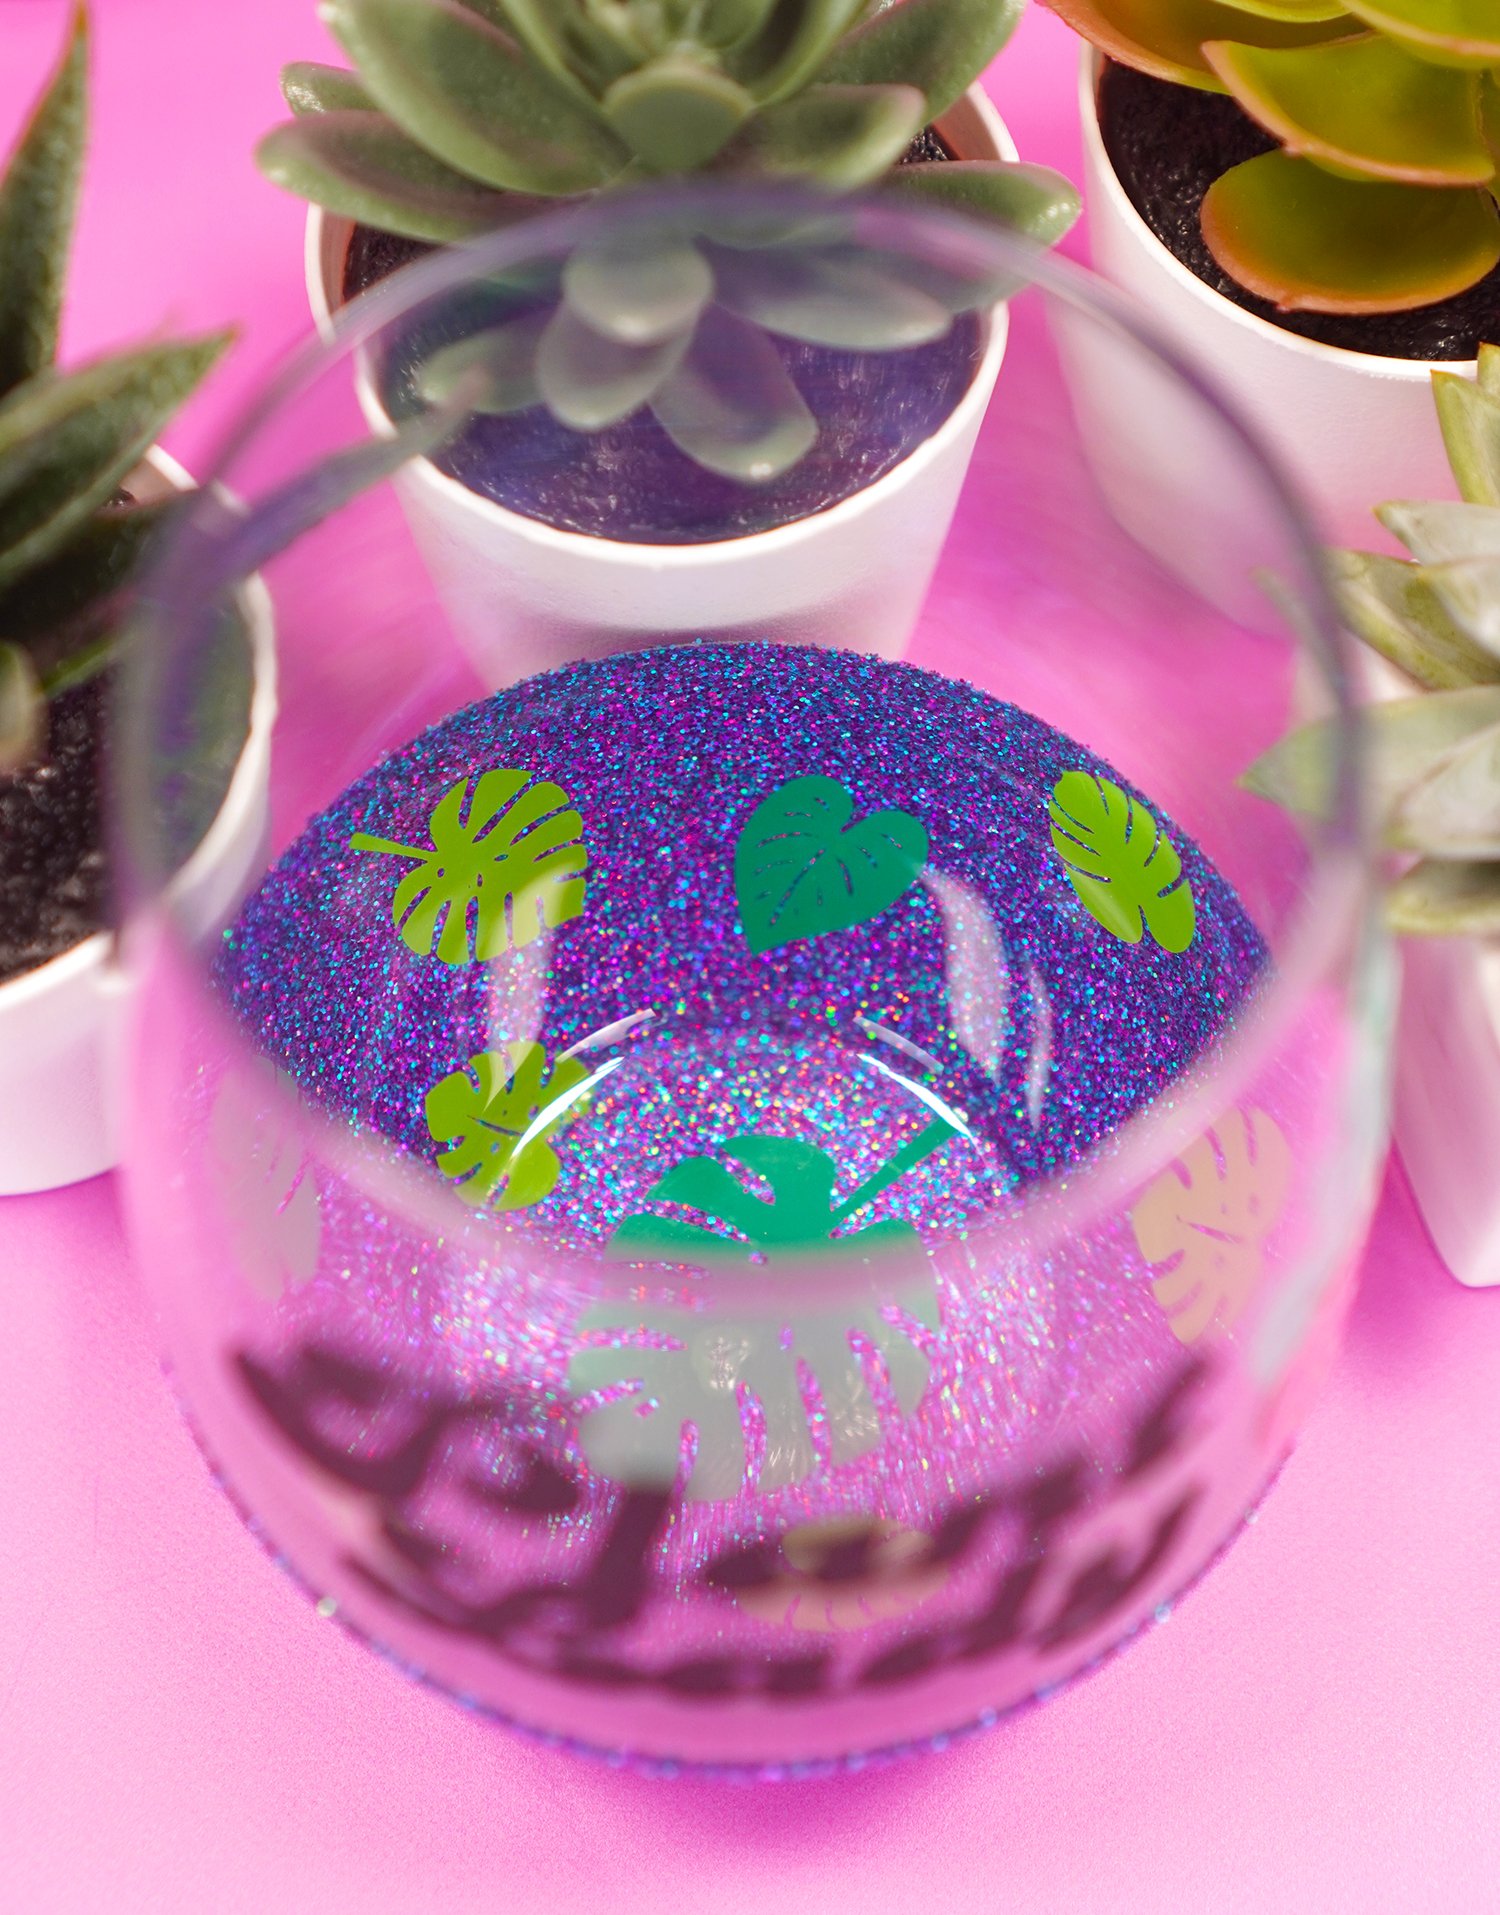 Inside of "Plant Lady" peekaboo wine glass - two toned monstera leaf decals on purple glitter